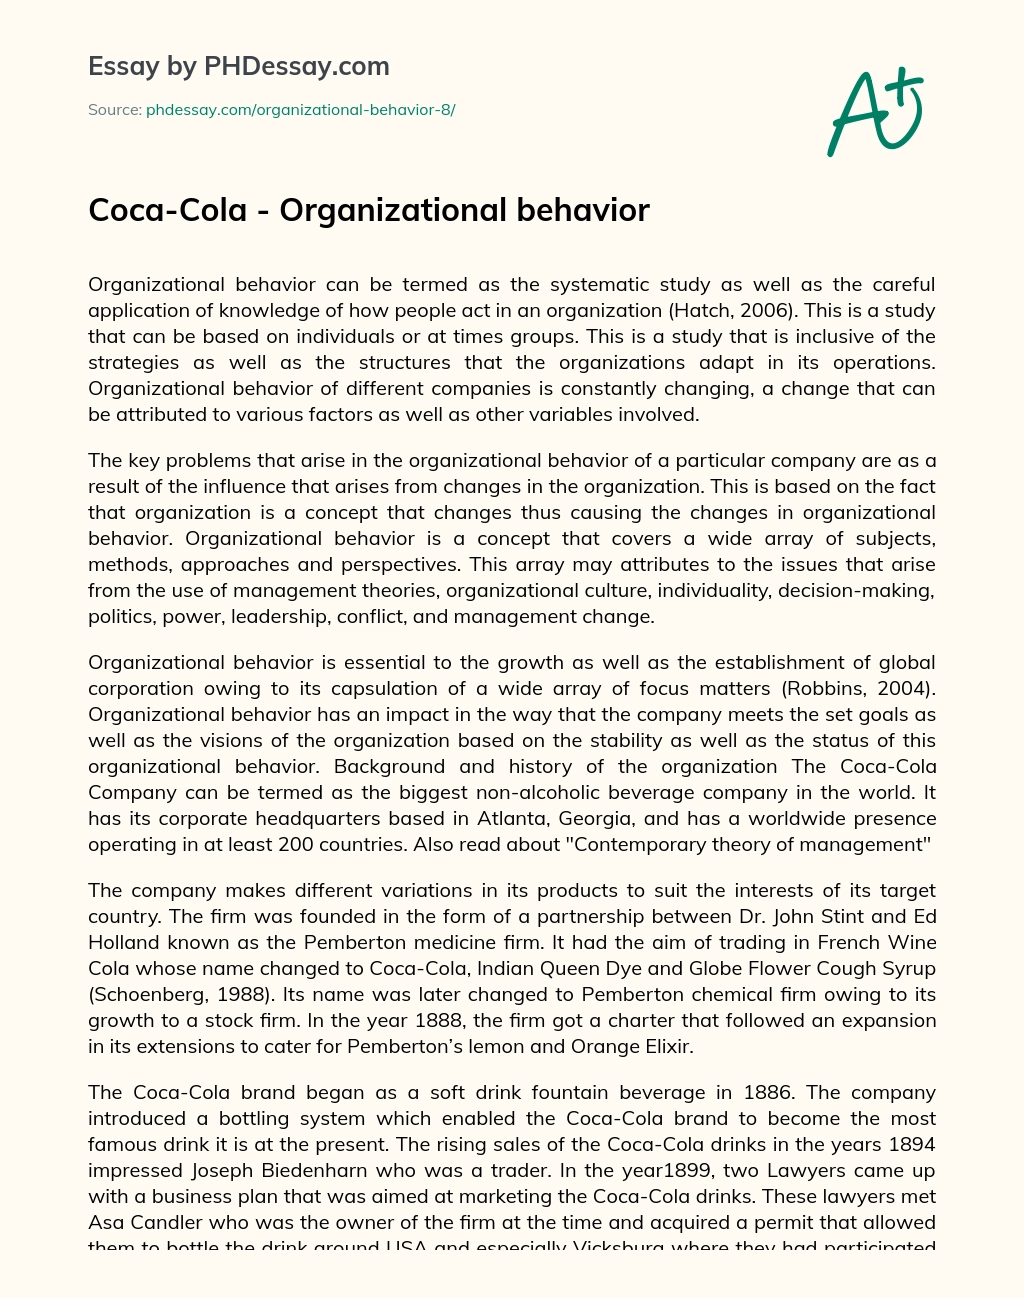 Coca-Cola – Organizational behavior essay